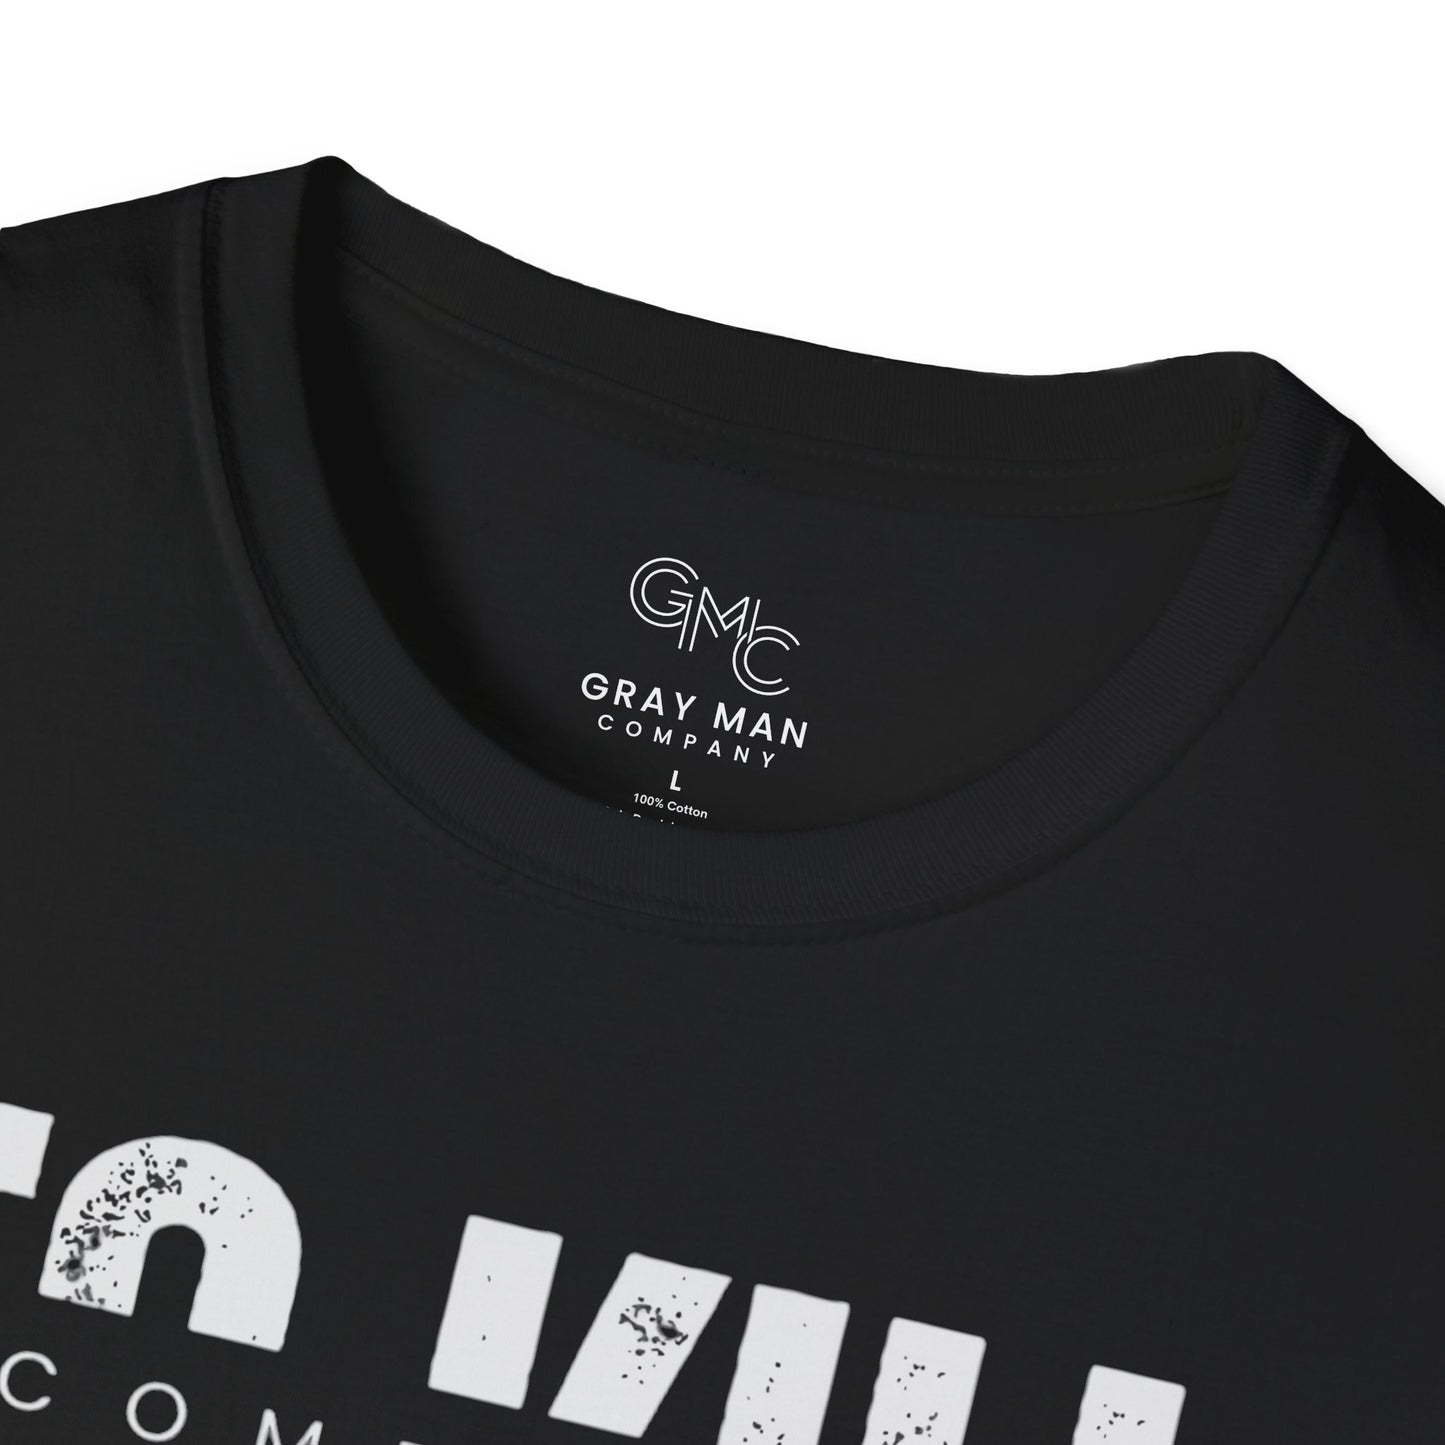 EDC Graphic T-Shirt - HARDER TO KILL